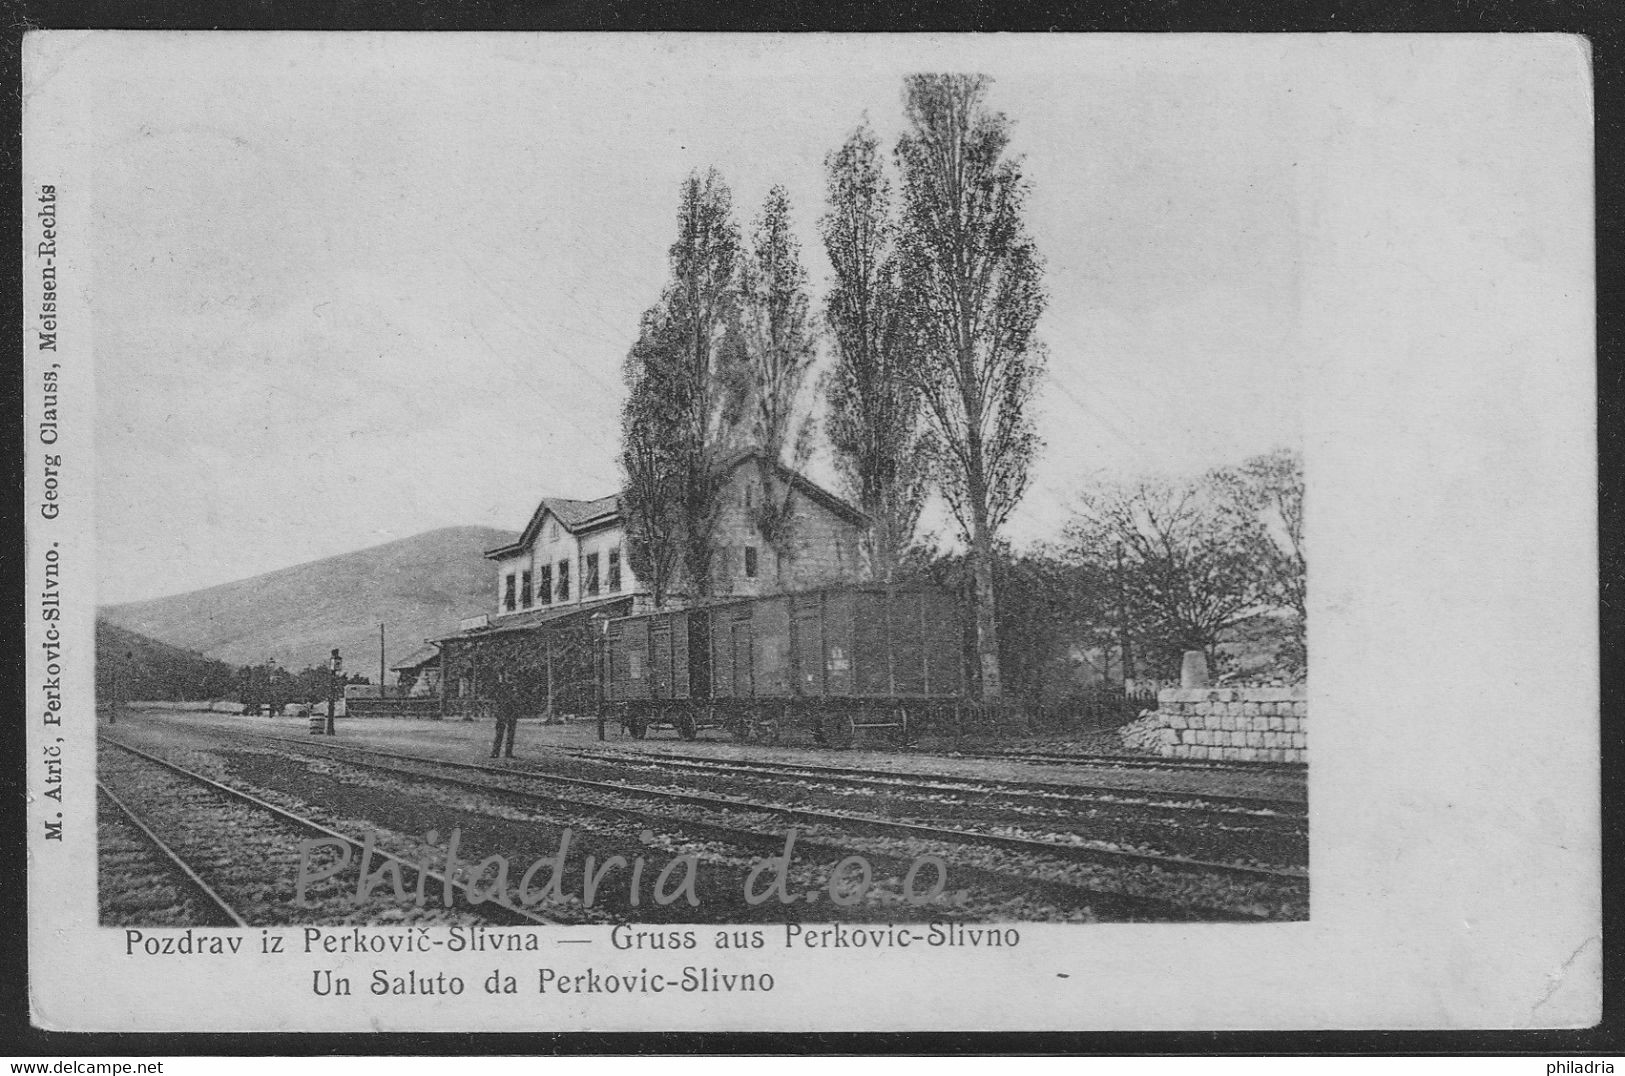 532_001 Perković - Slivno, Railway station, mailed ca 1905.jpg